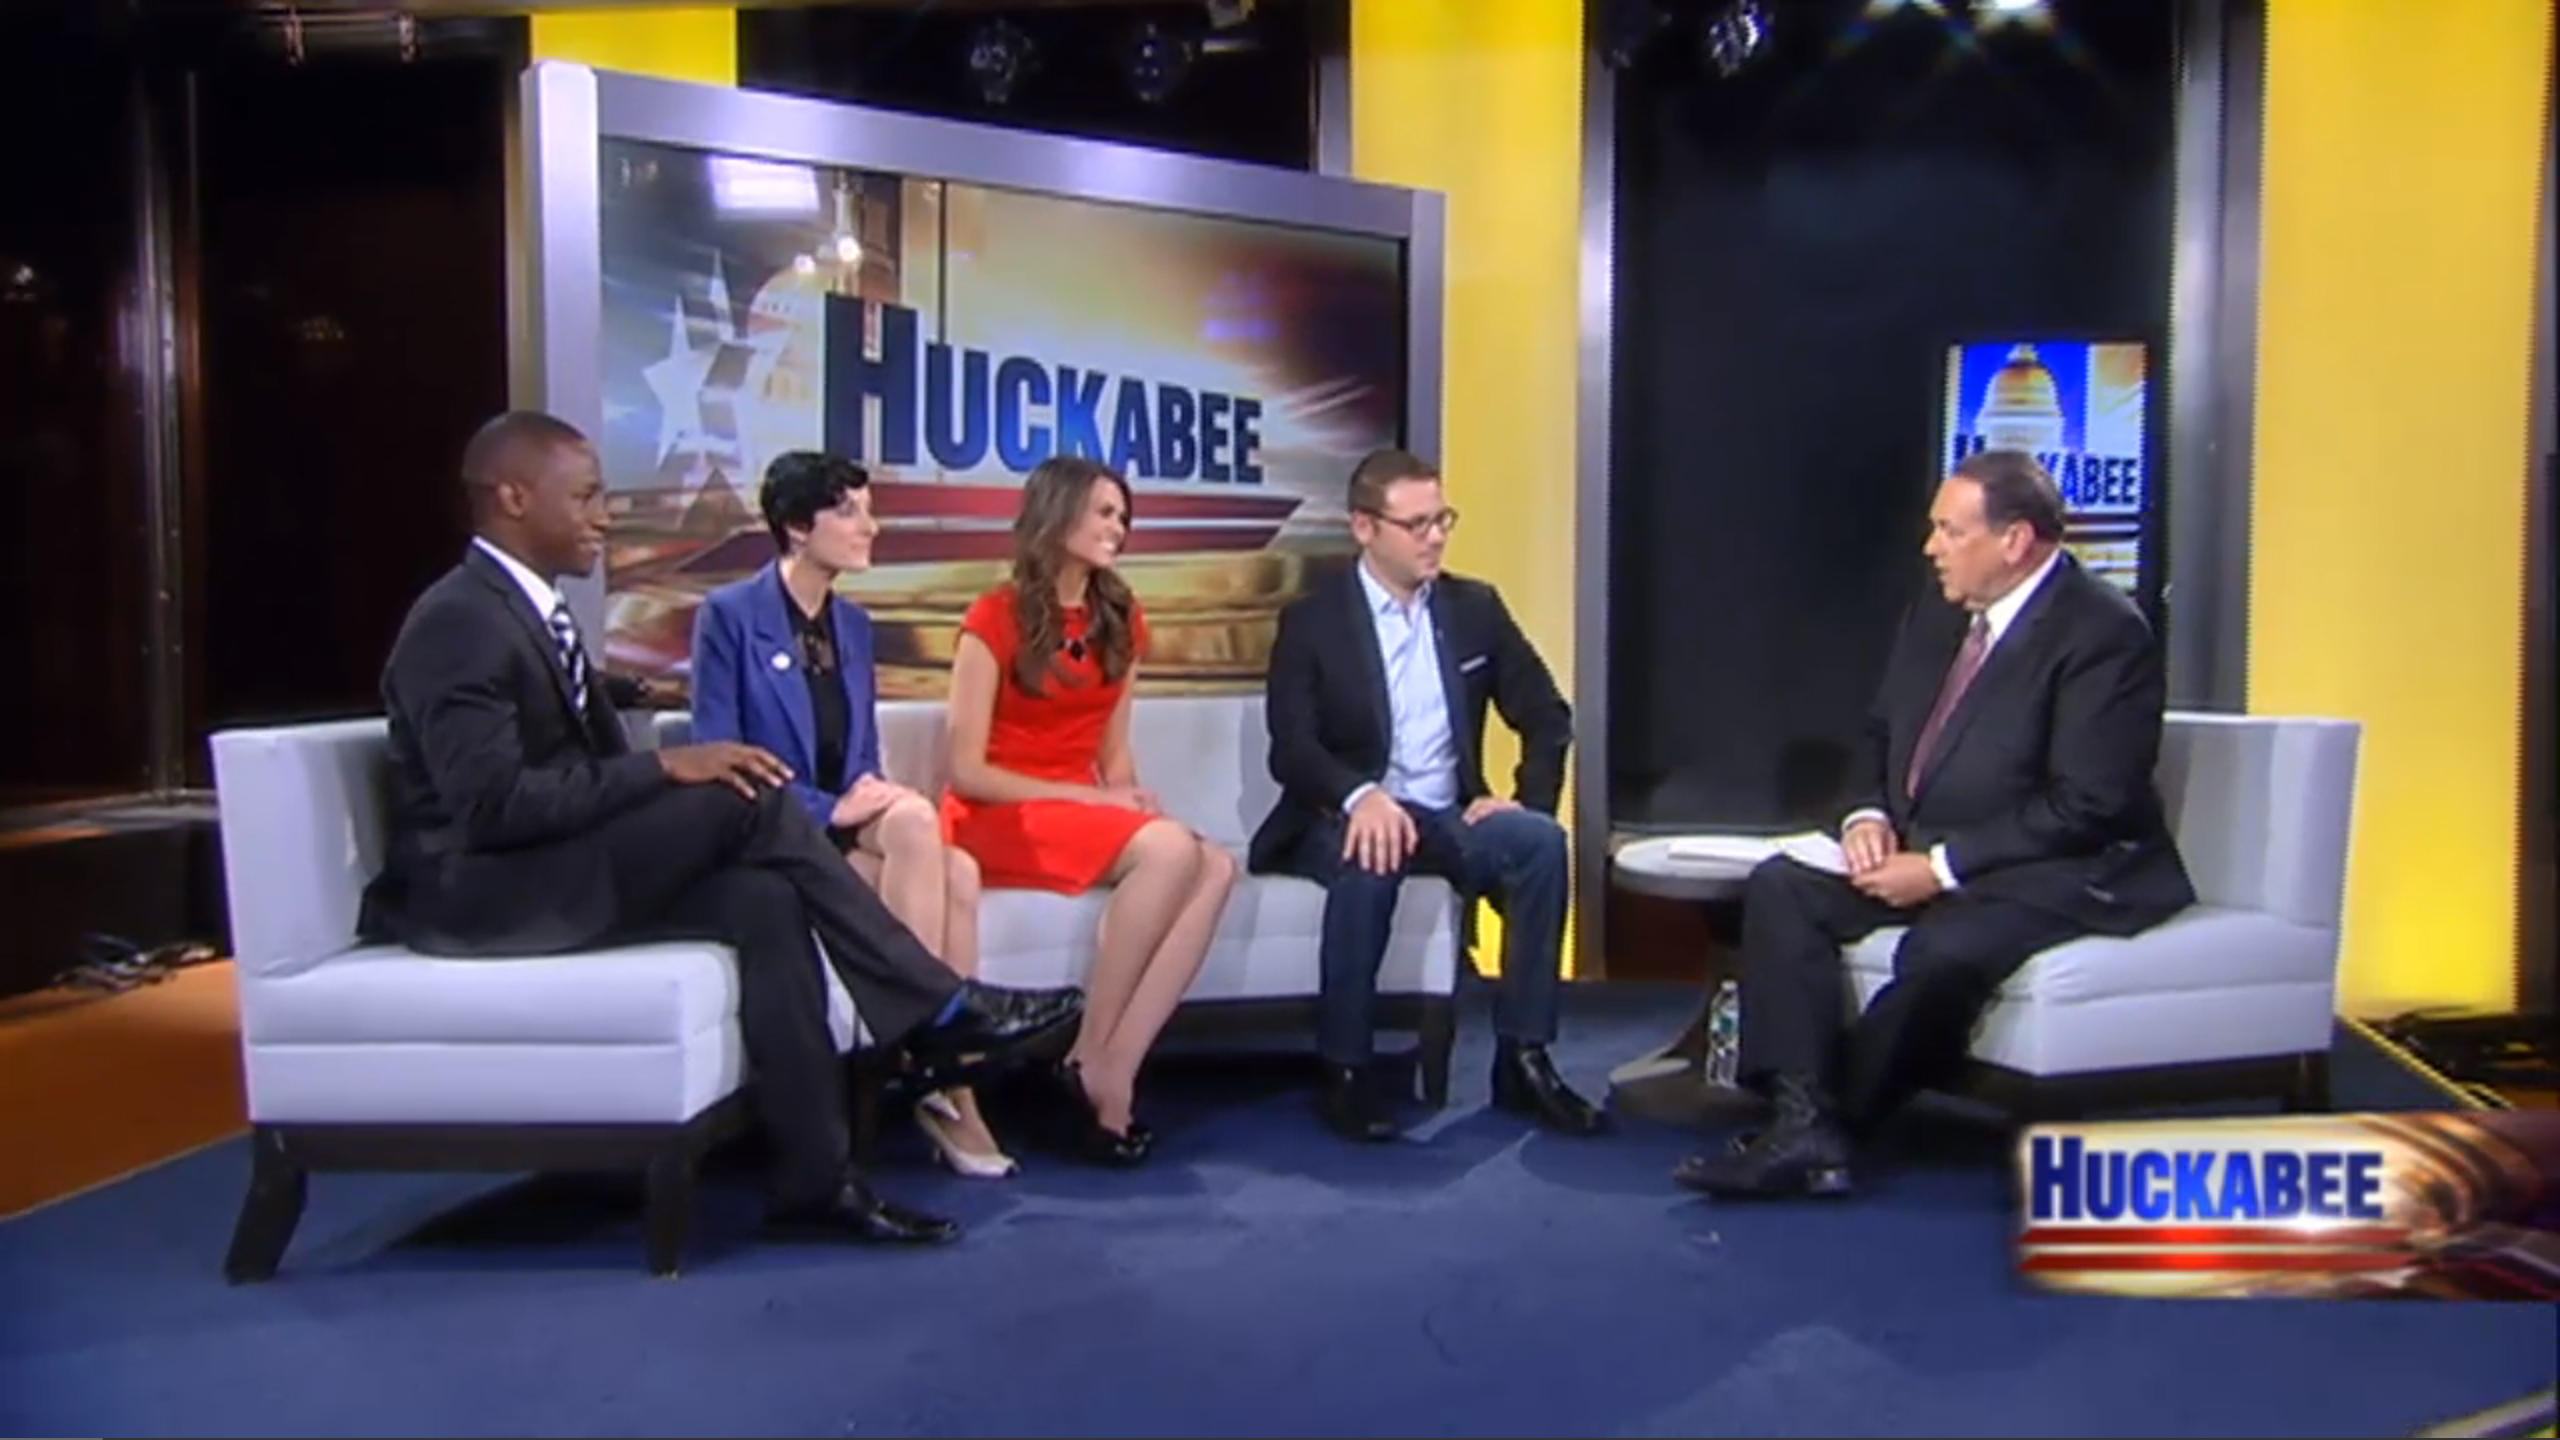 Ouachita senior Molly Bowman featured on Fox News “Huckabee” show.